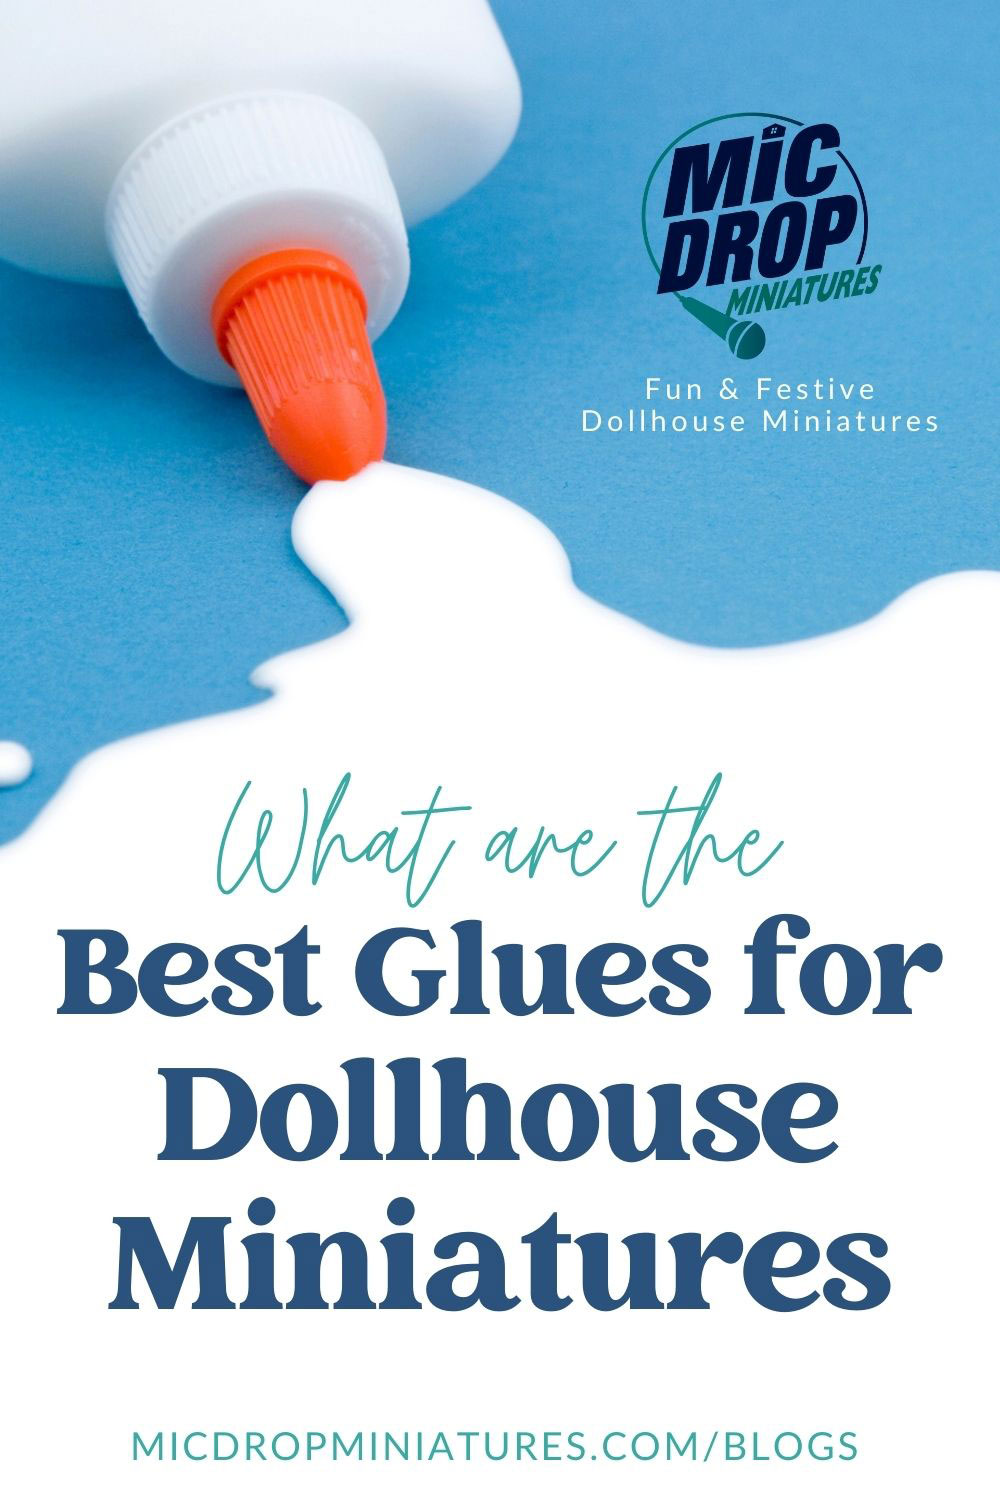 Dollhouse-miniature-best-glues